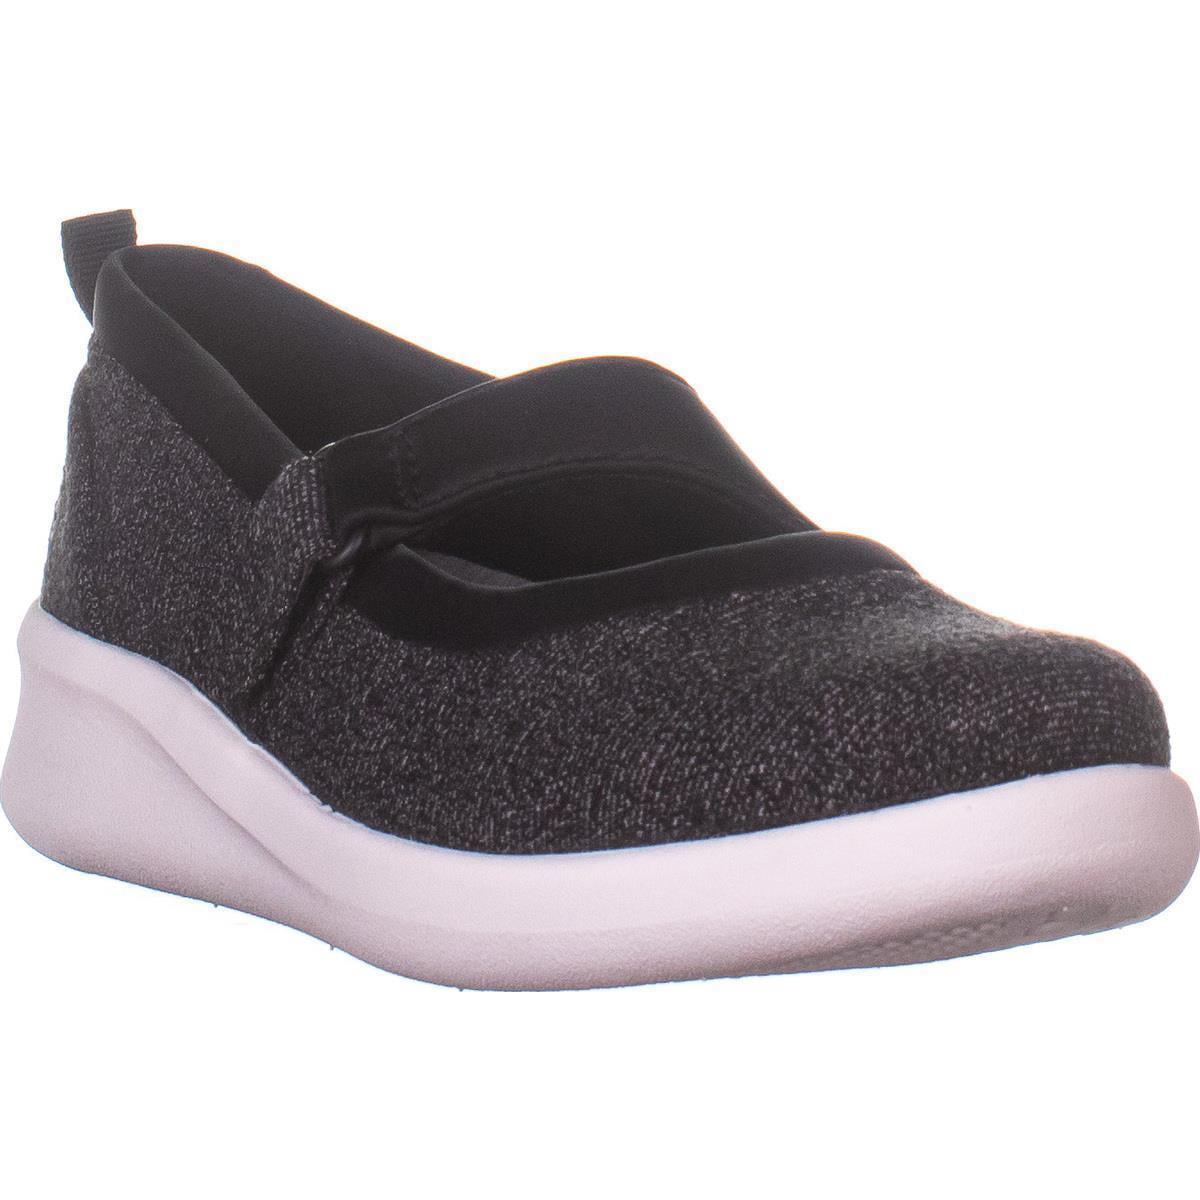 Clarks Sillian2.0Soul Textile Shoes in Standard Fit Size 4½ Black 